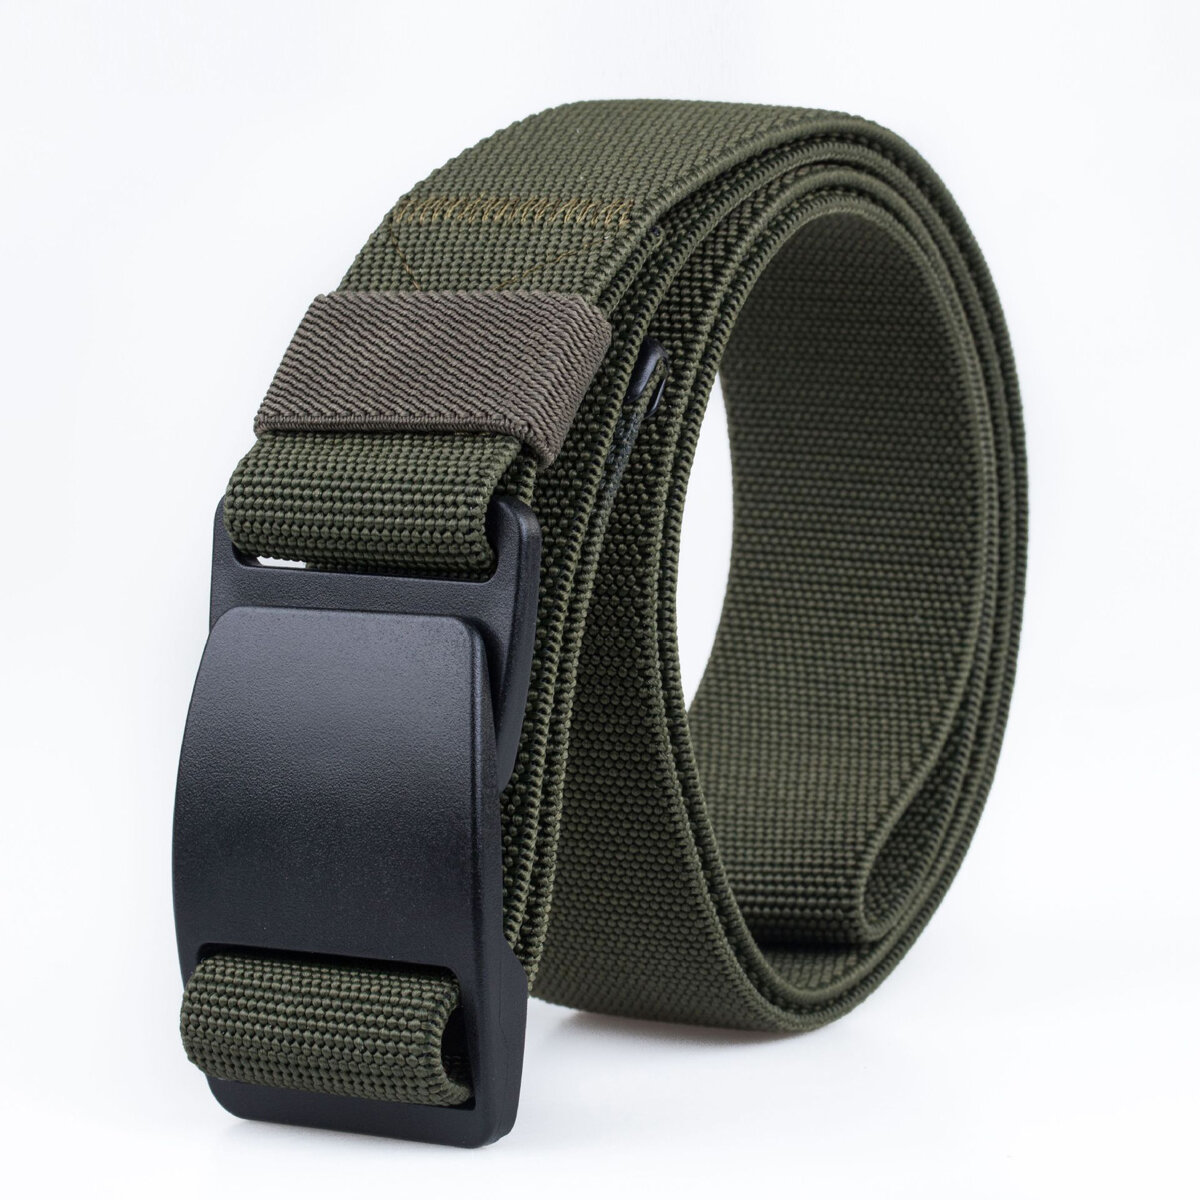 awmn s01 120cm belts for men women camouflage belt military tactical ...